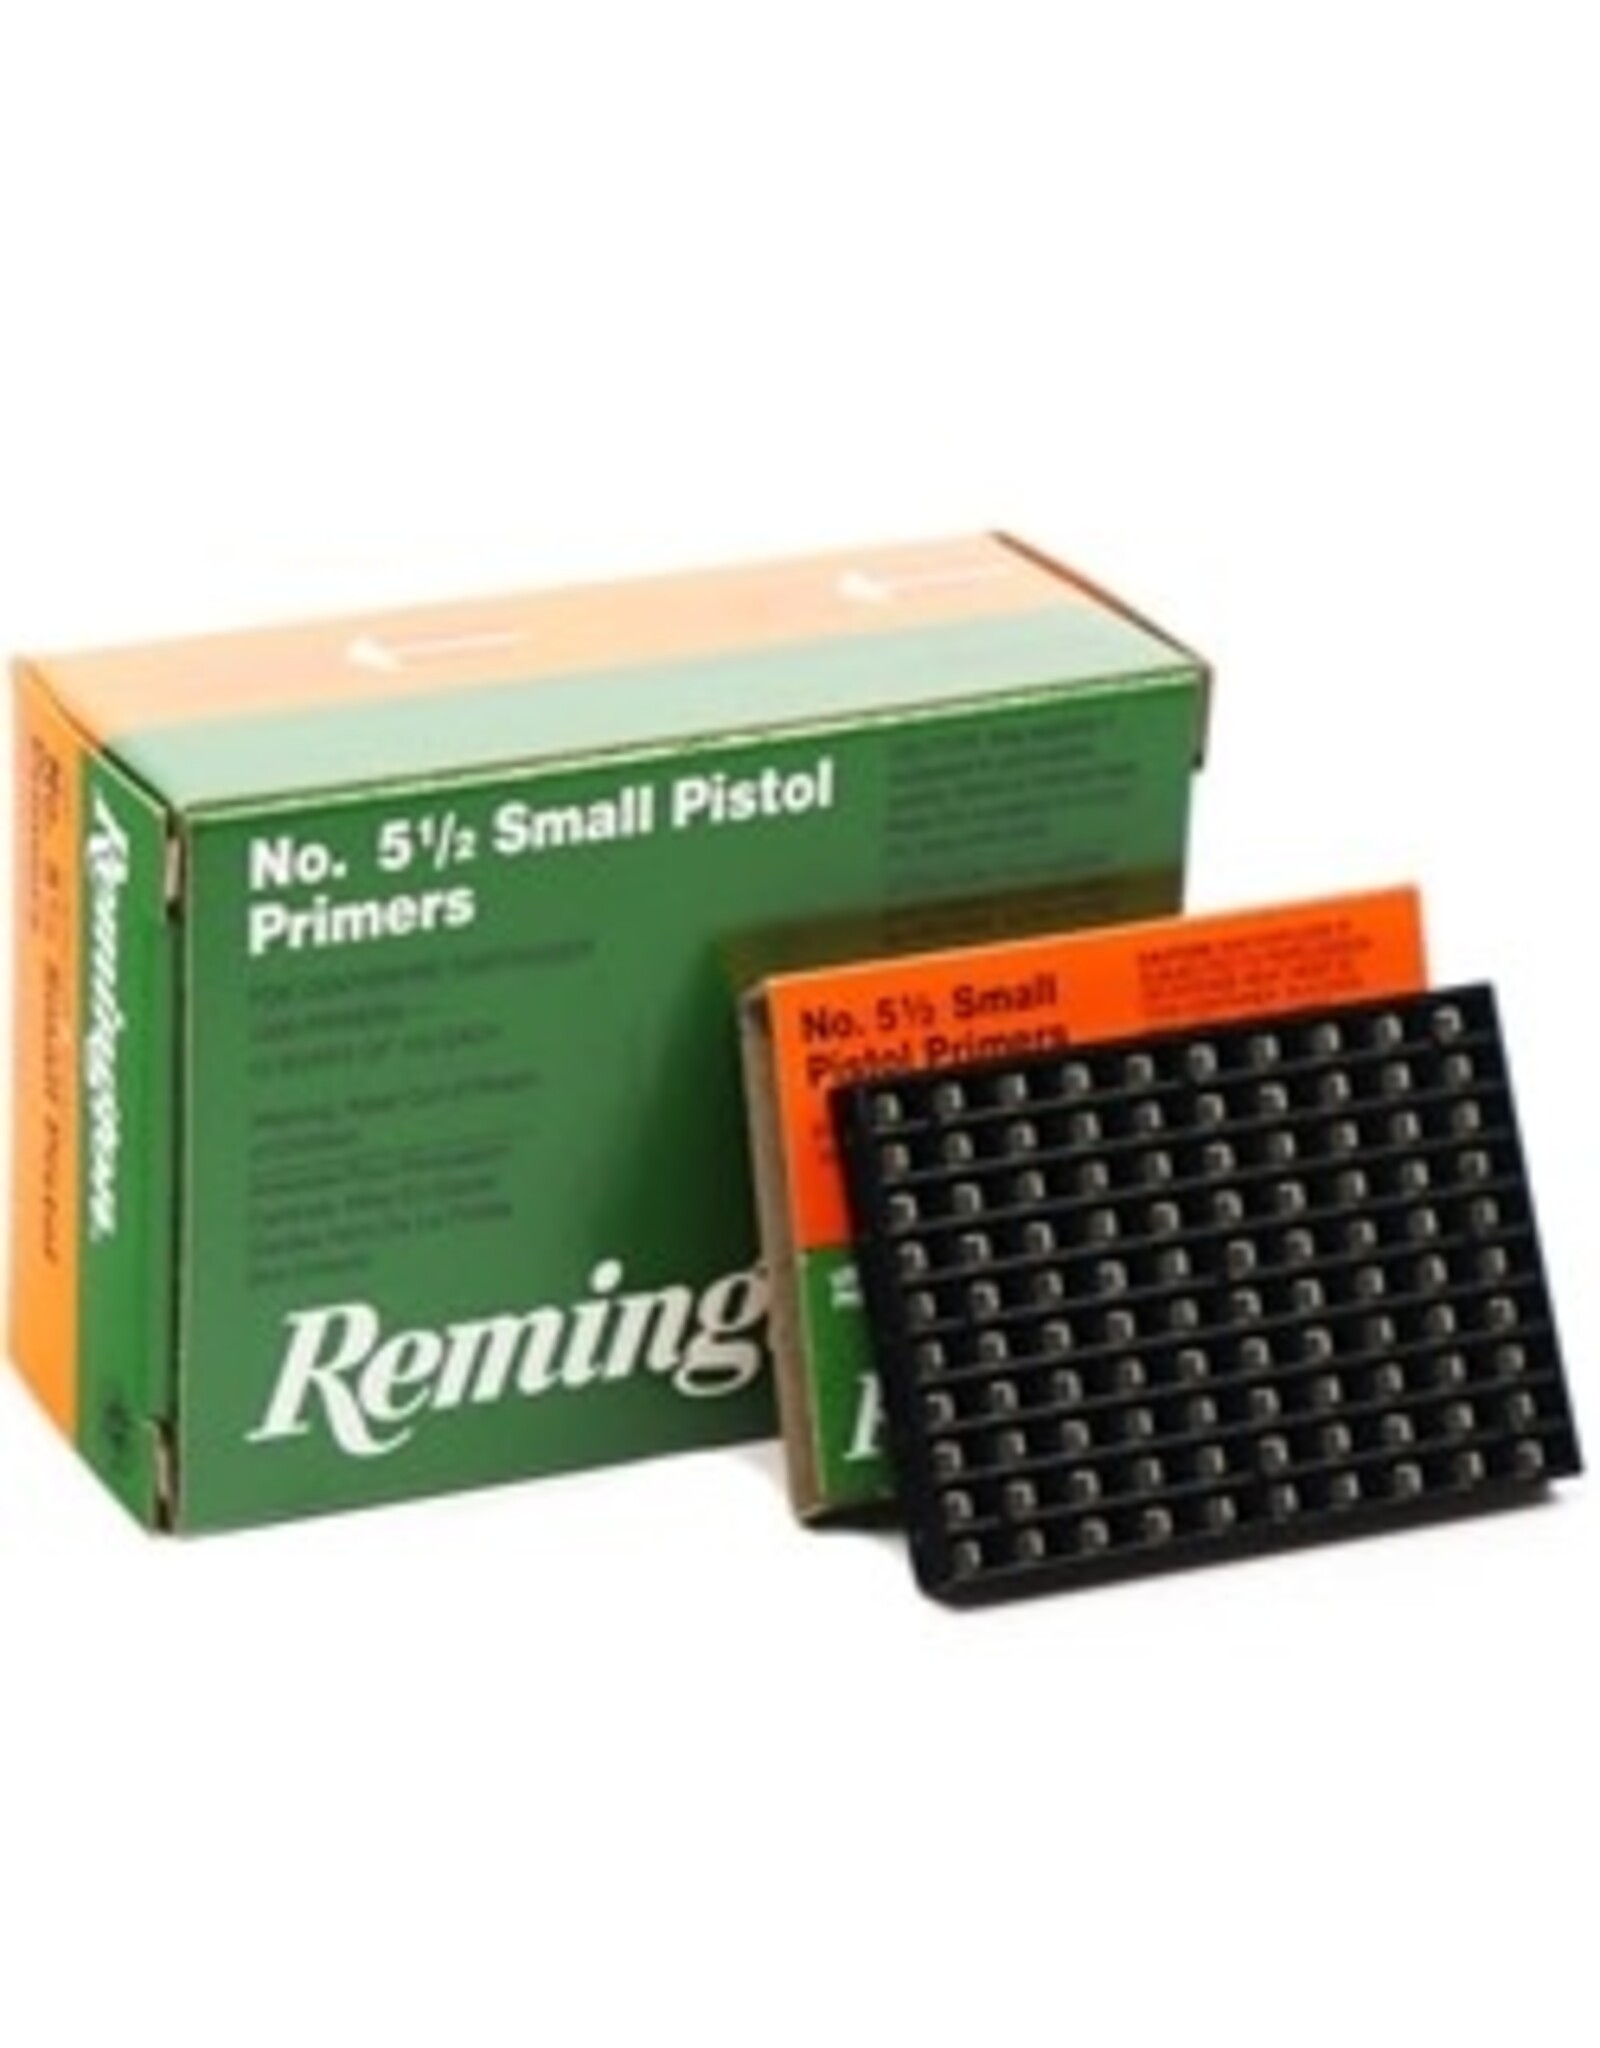 Remington No. 5-1/2 Small Pistol Primers - 1000 Count